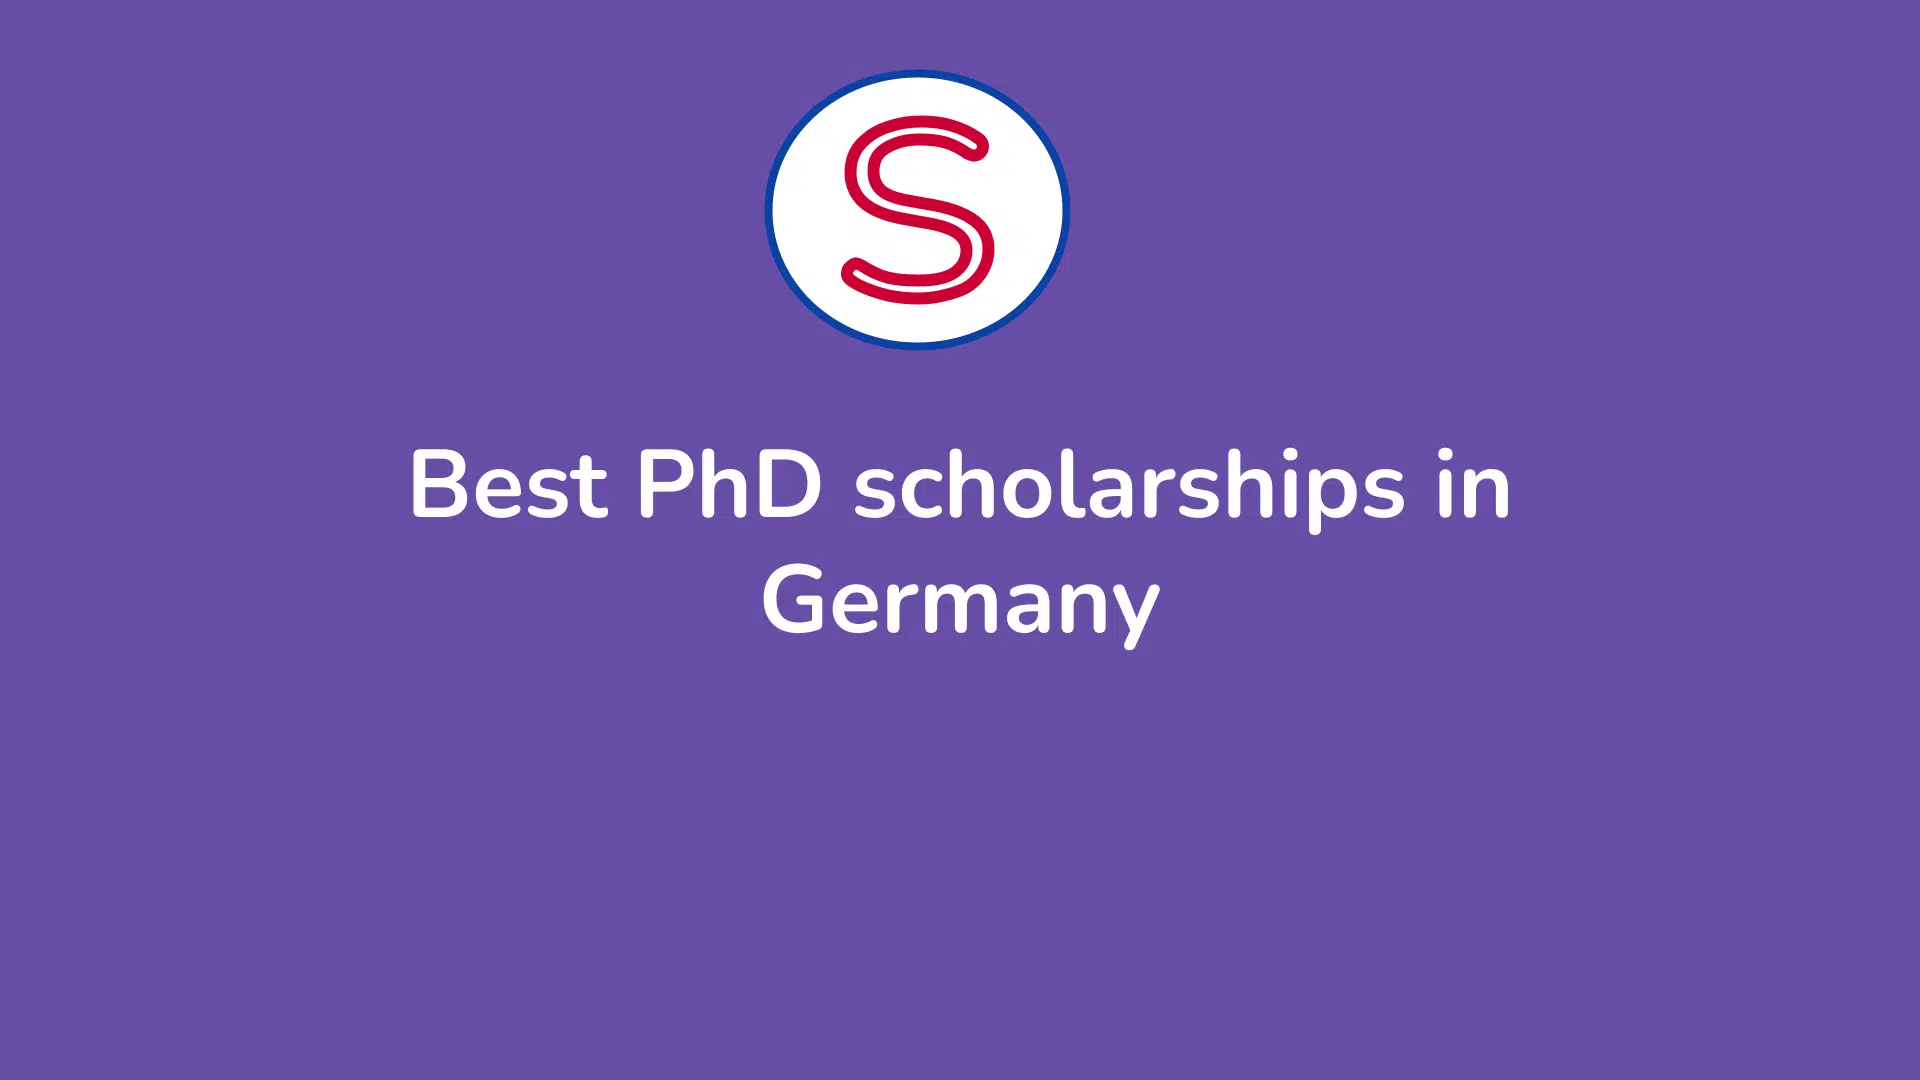 PhD scholarships in Germany